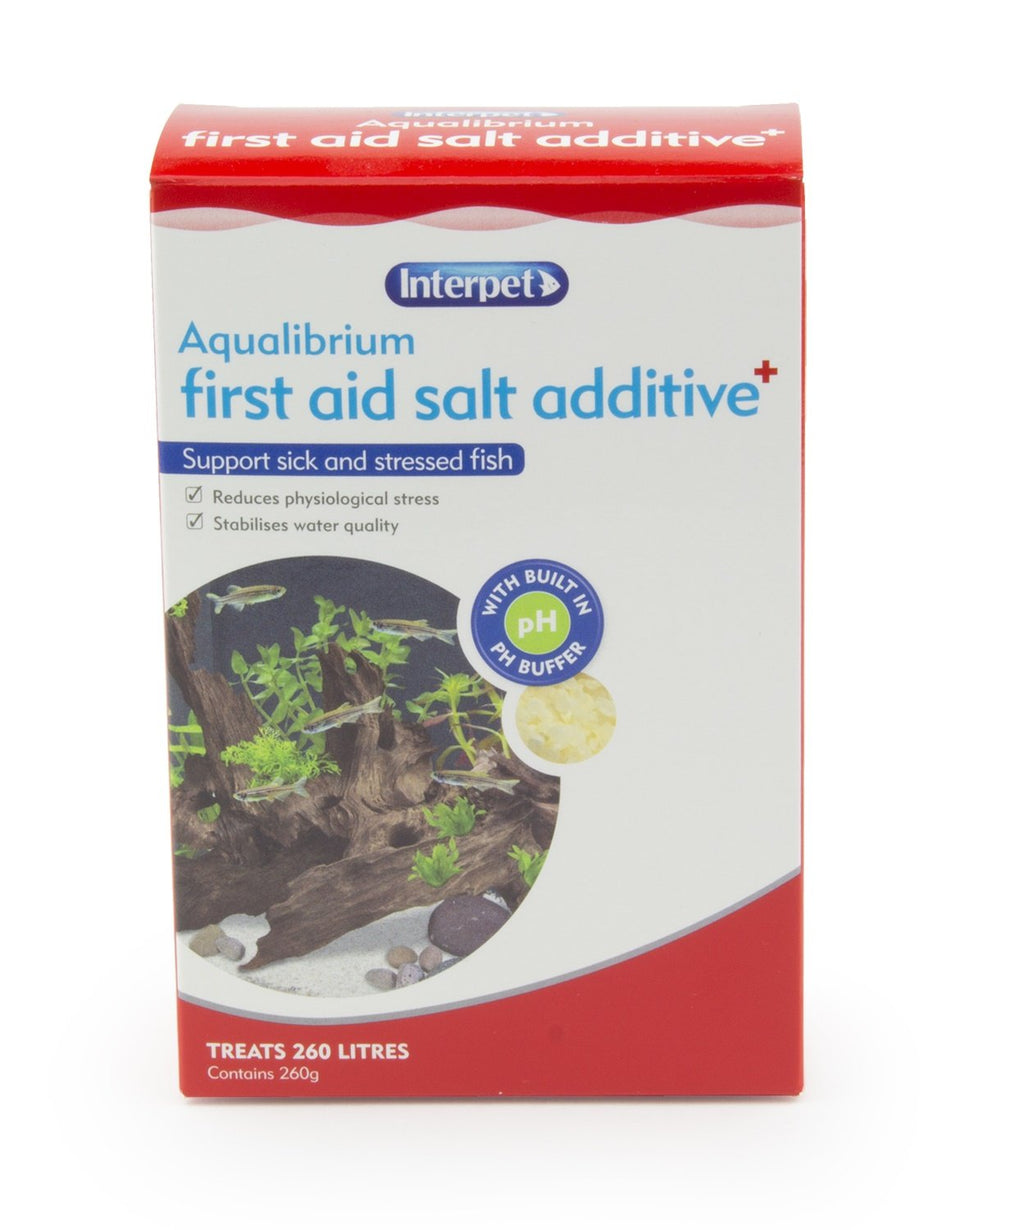 Interpet Aqualibrium First Aid Salt Additive Tonic Treatment, Support Sick and Stressed Aquarium Fish, pH Buffer, 260 g - PawsPlanet Australia